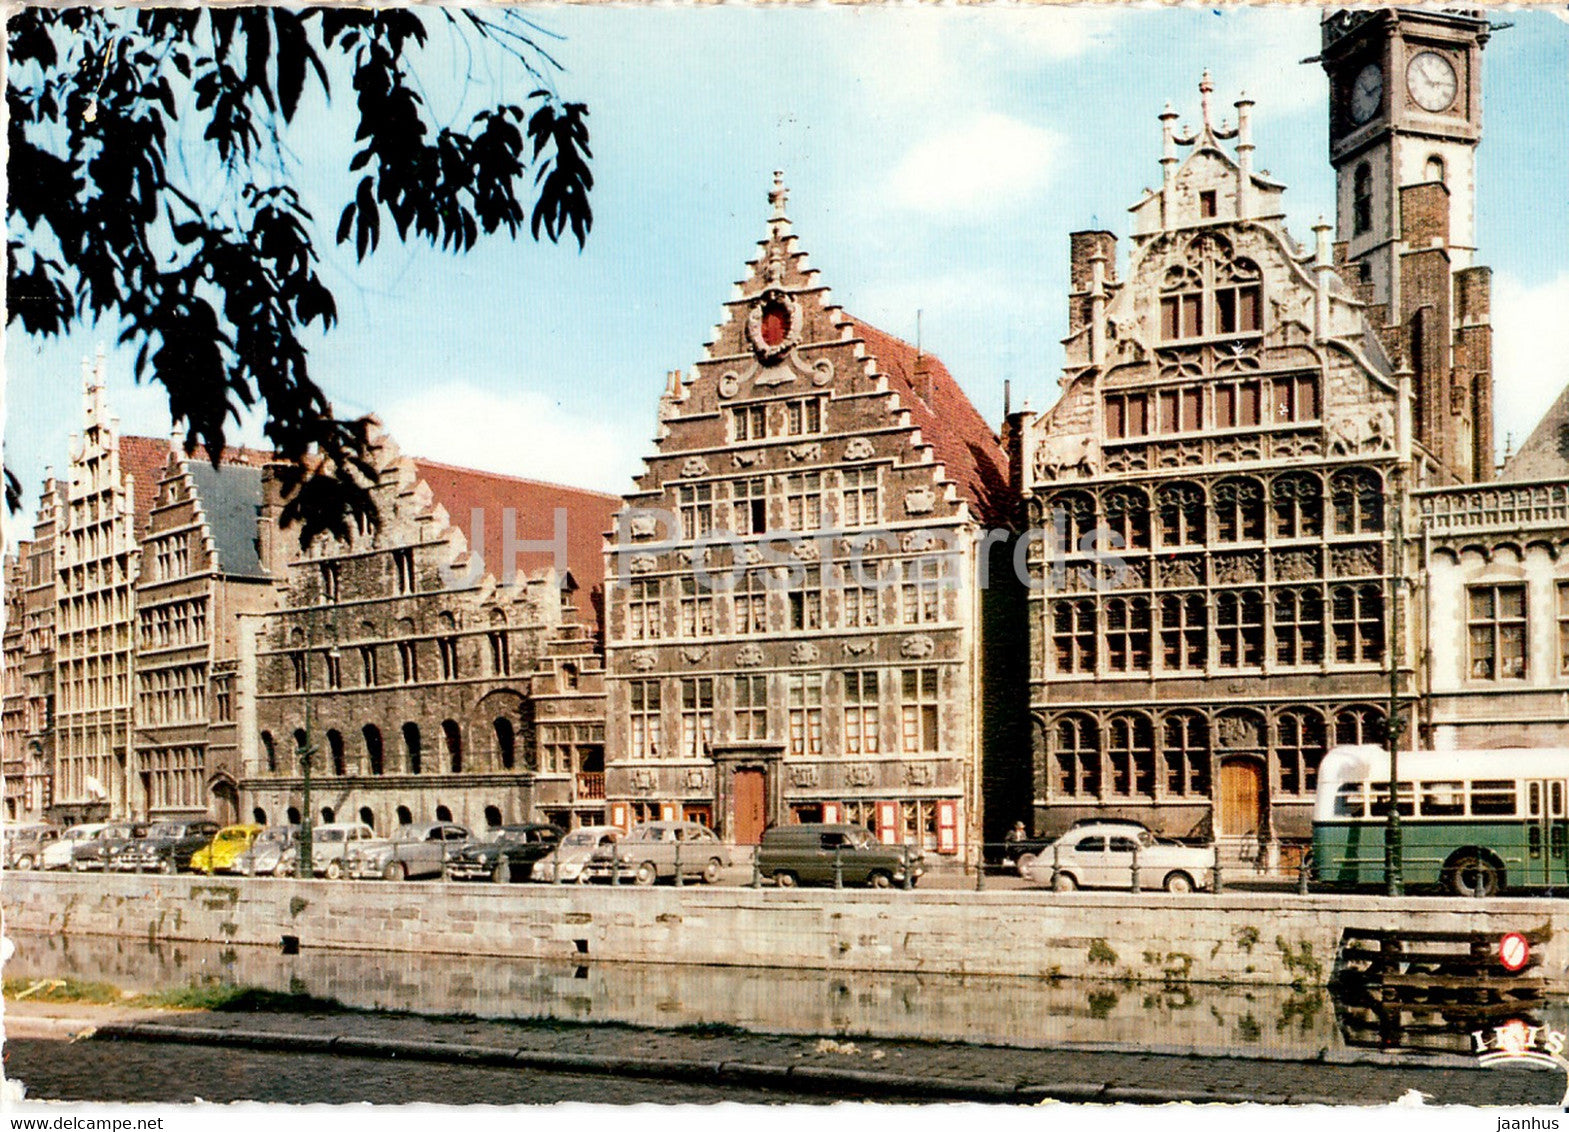 Gent - Graslei - old cars - 1969 - Belgium - used - JH Postcards